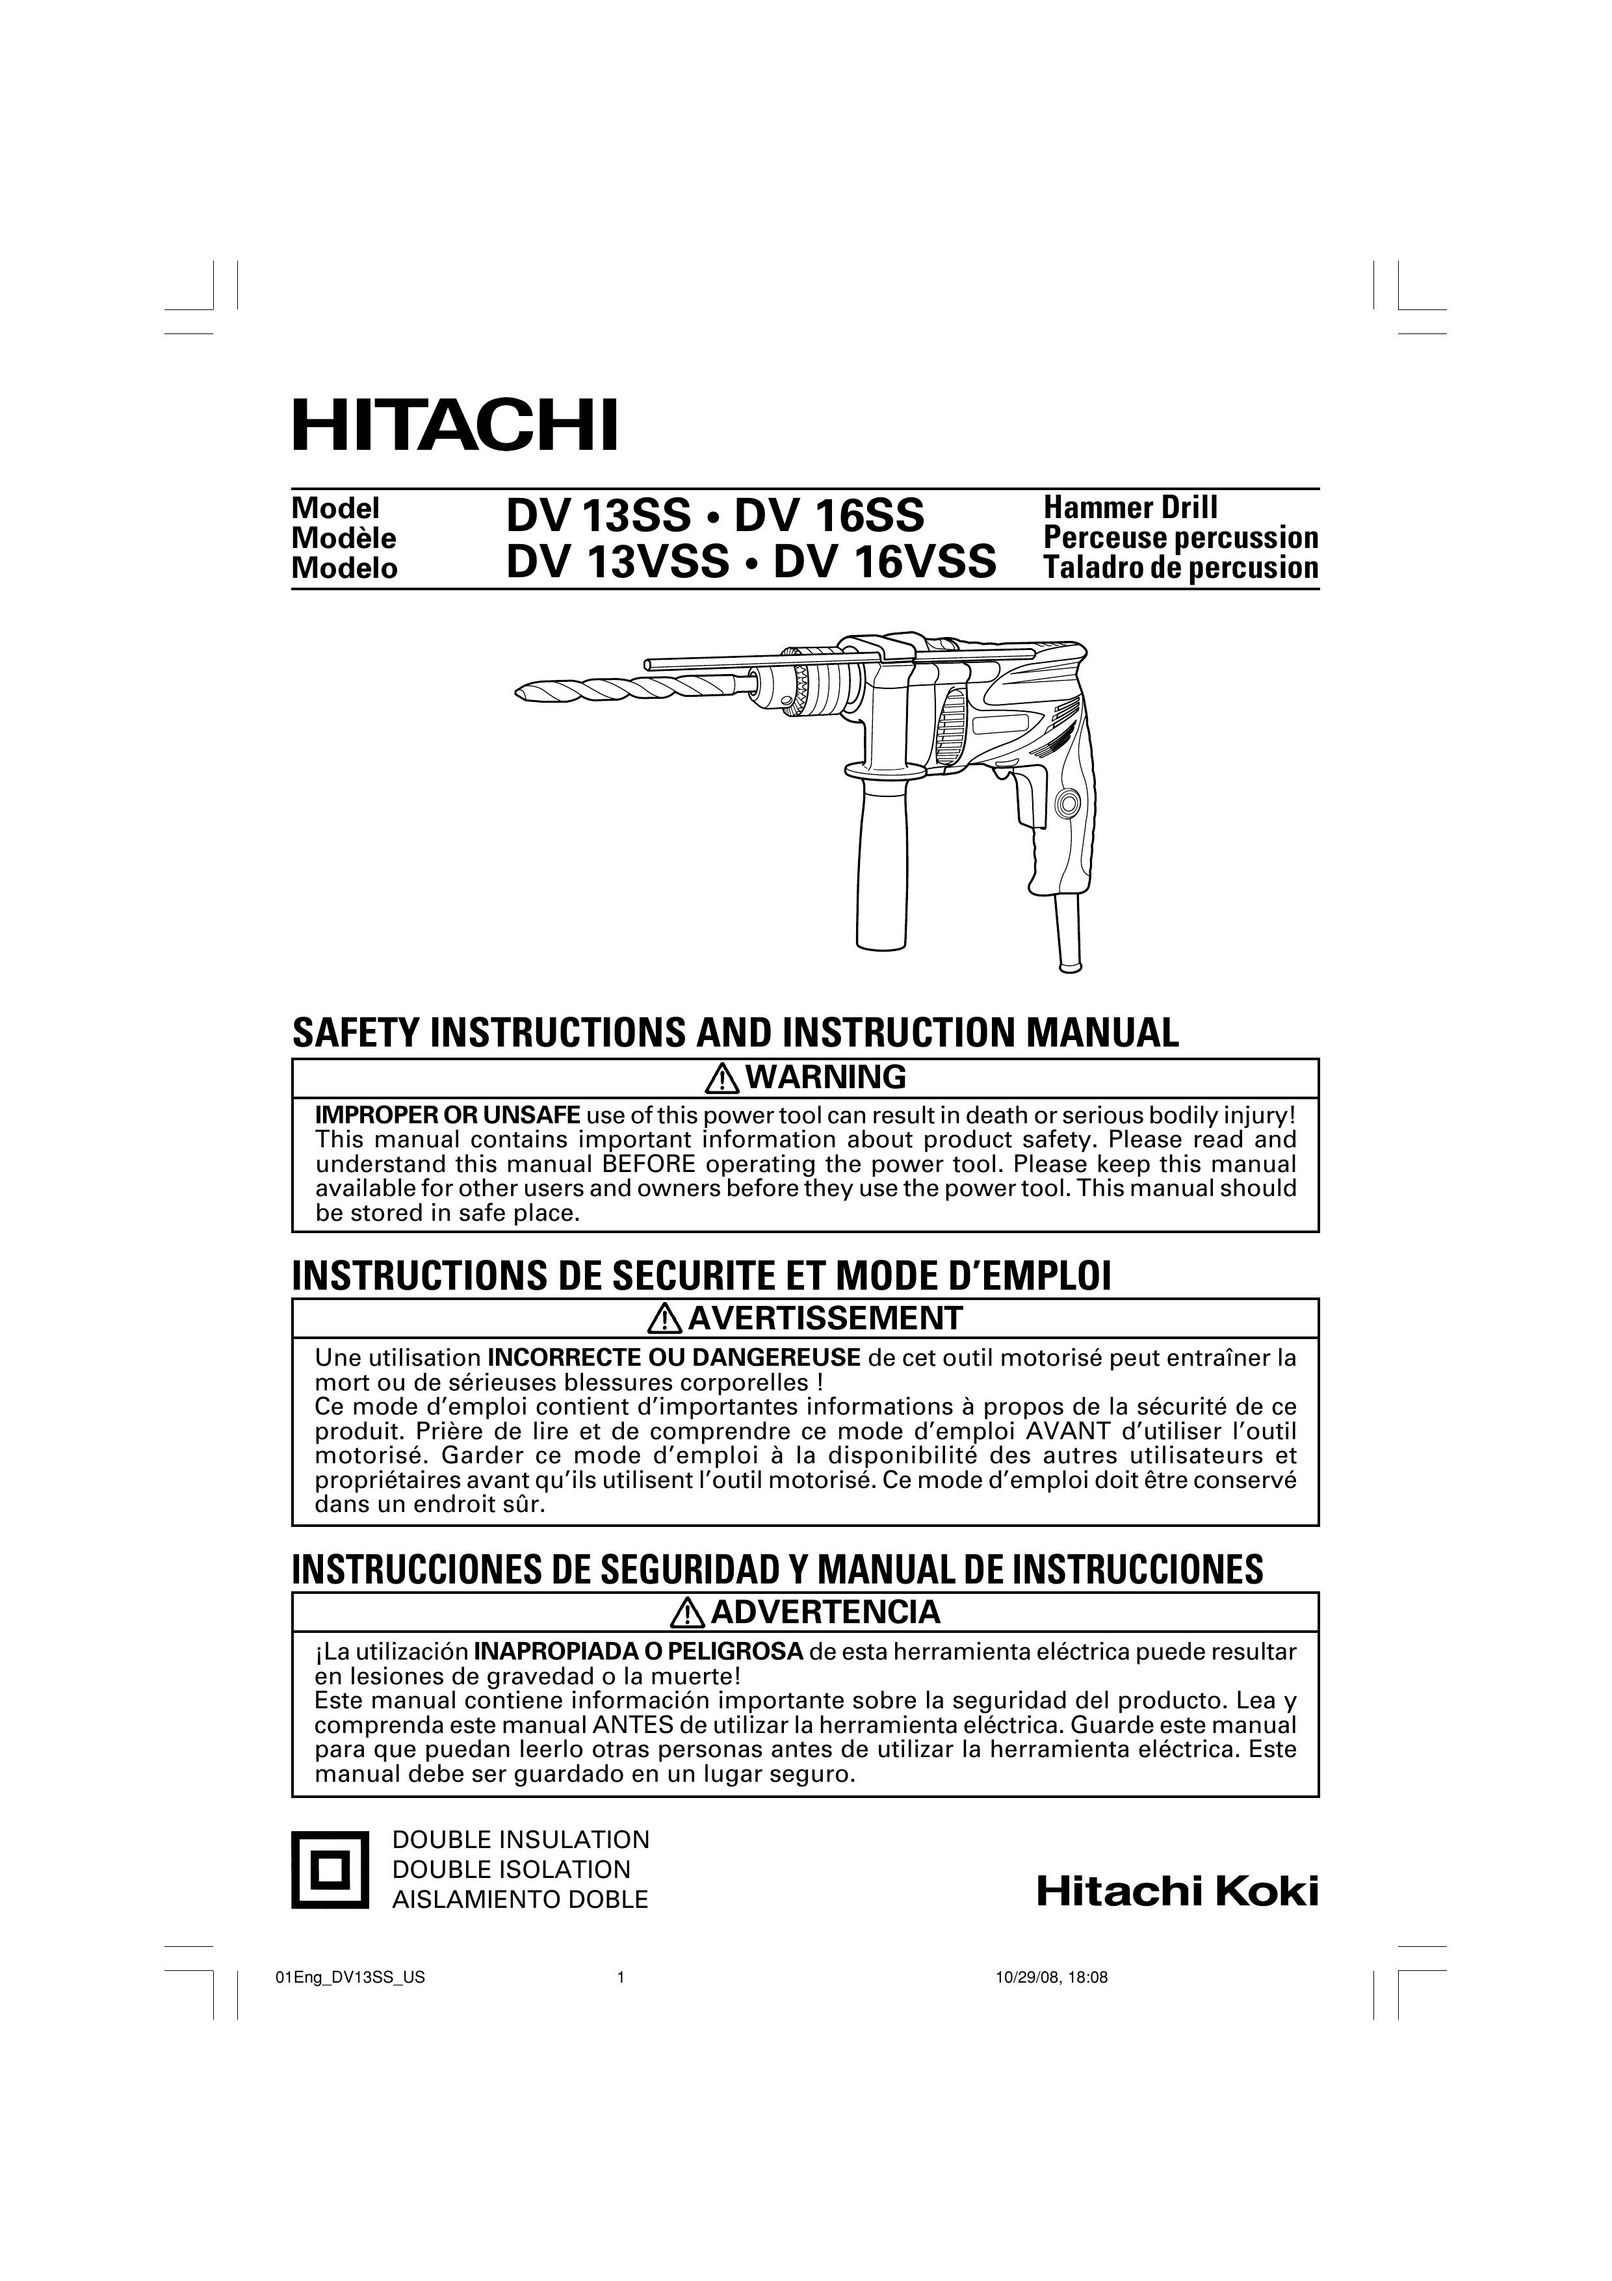 Hitachi DV 16SS Cordless Drill User Manual